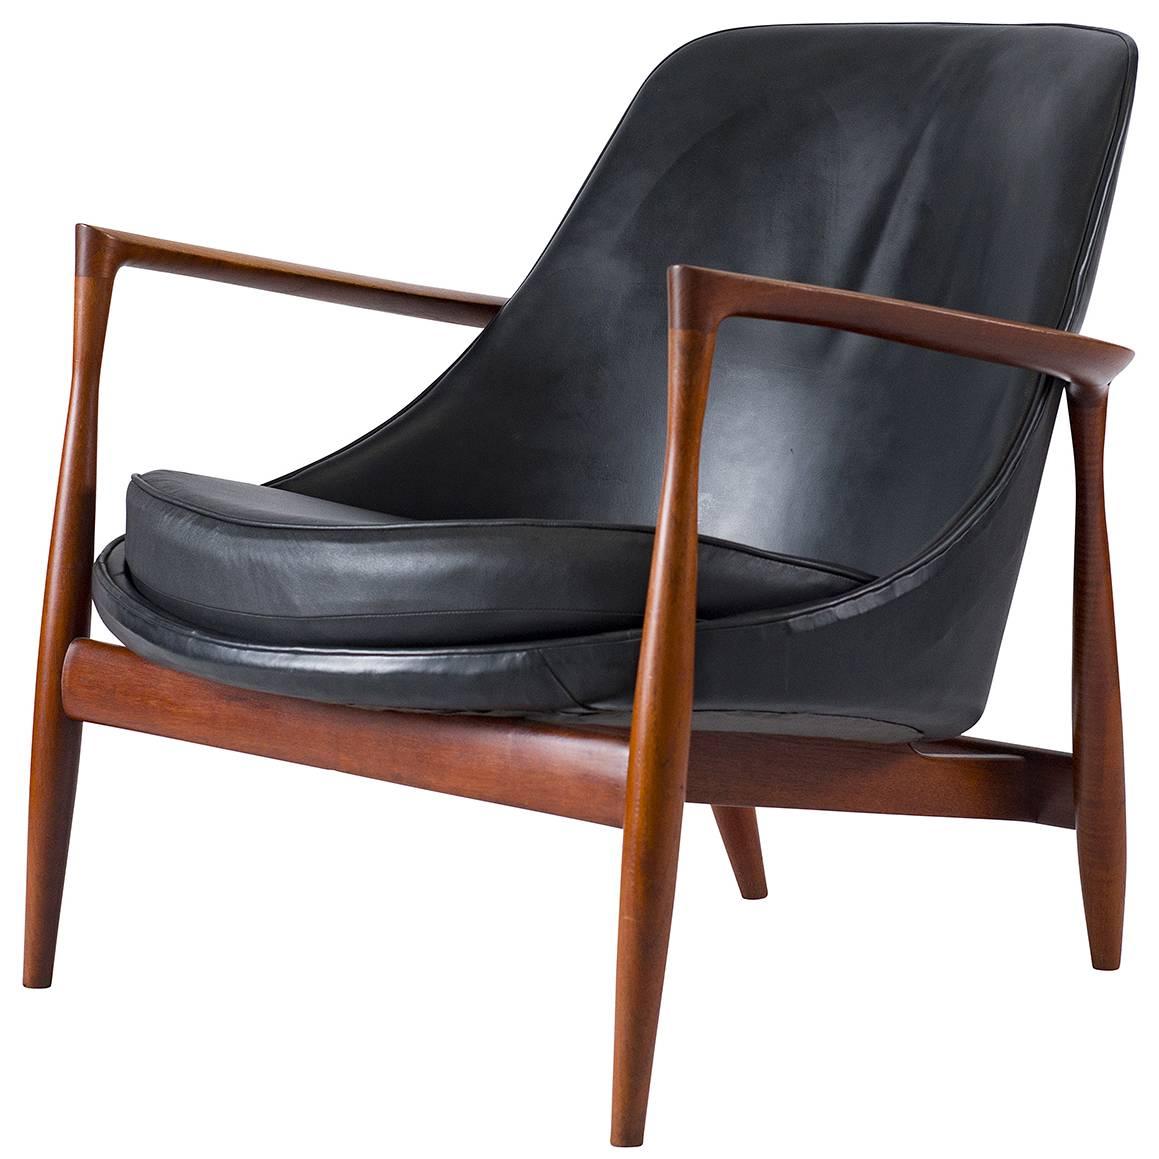 Ib Kofod-Larsen "Elizabeth" Chair